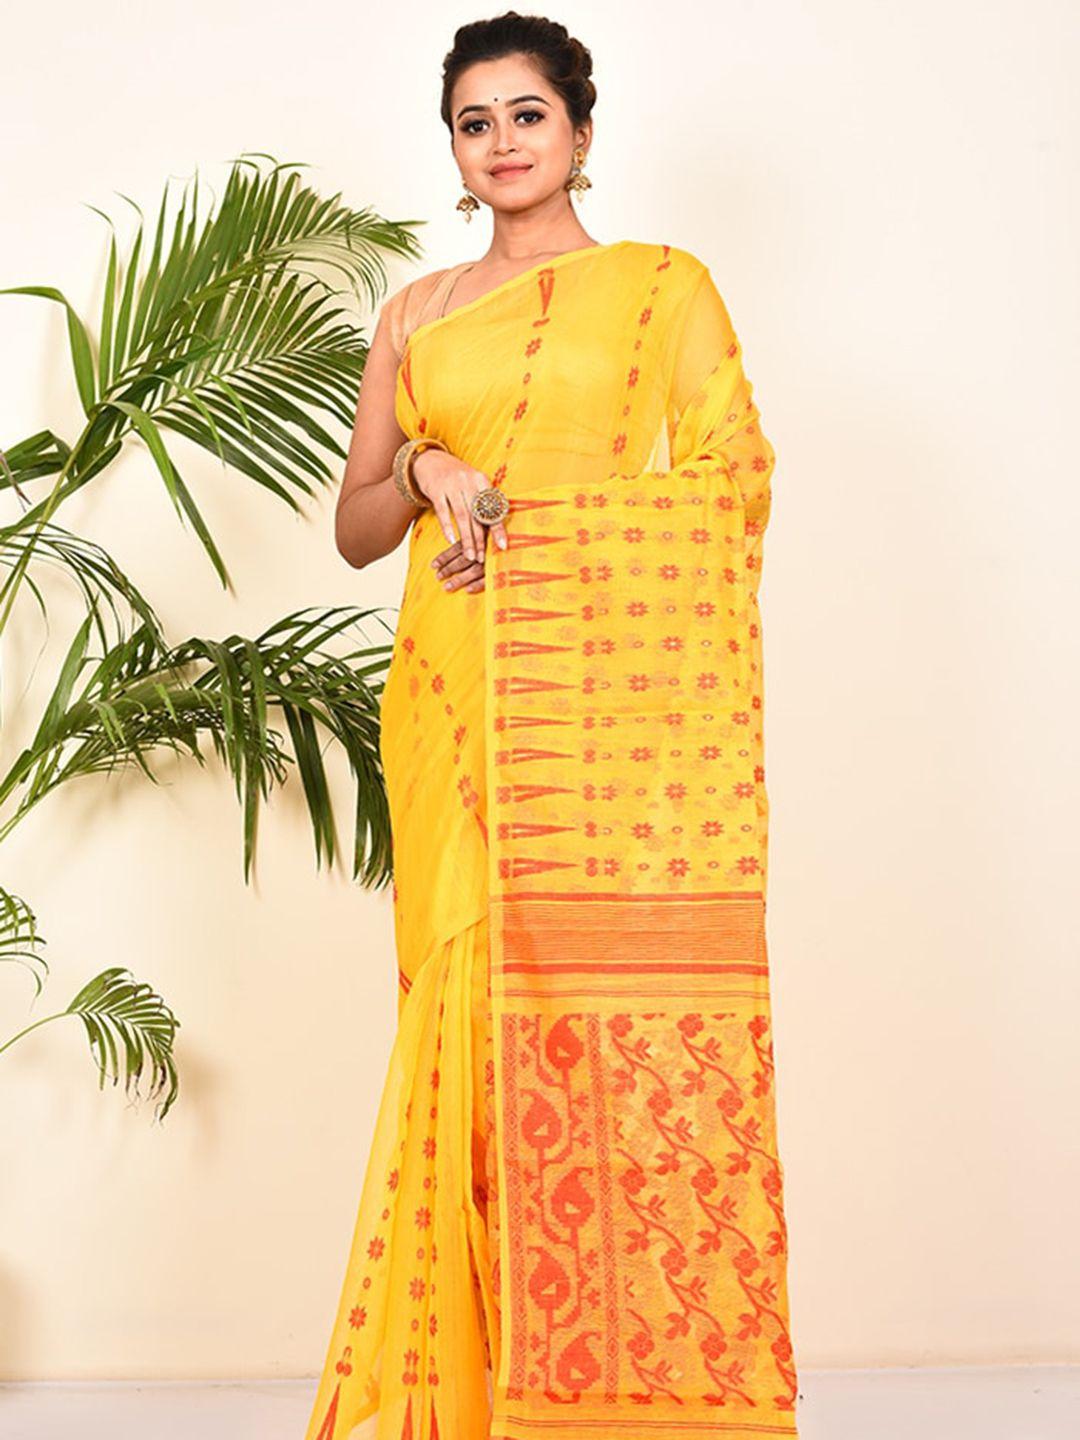 allsilks yellow & red ethnic motifs saree